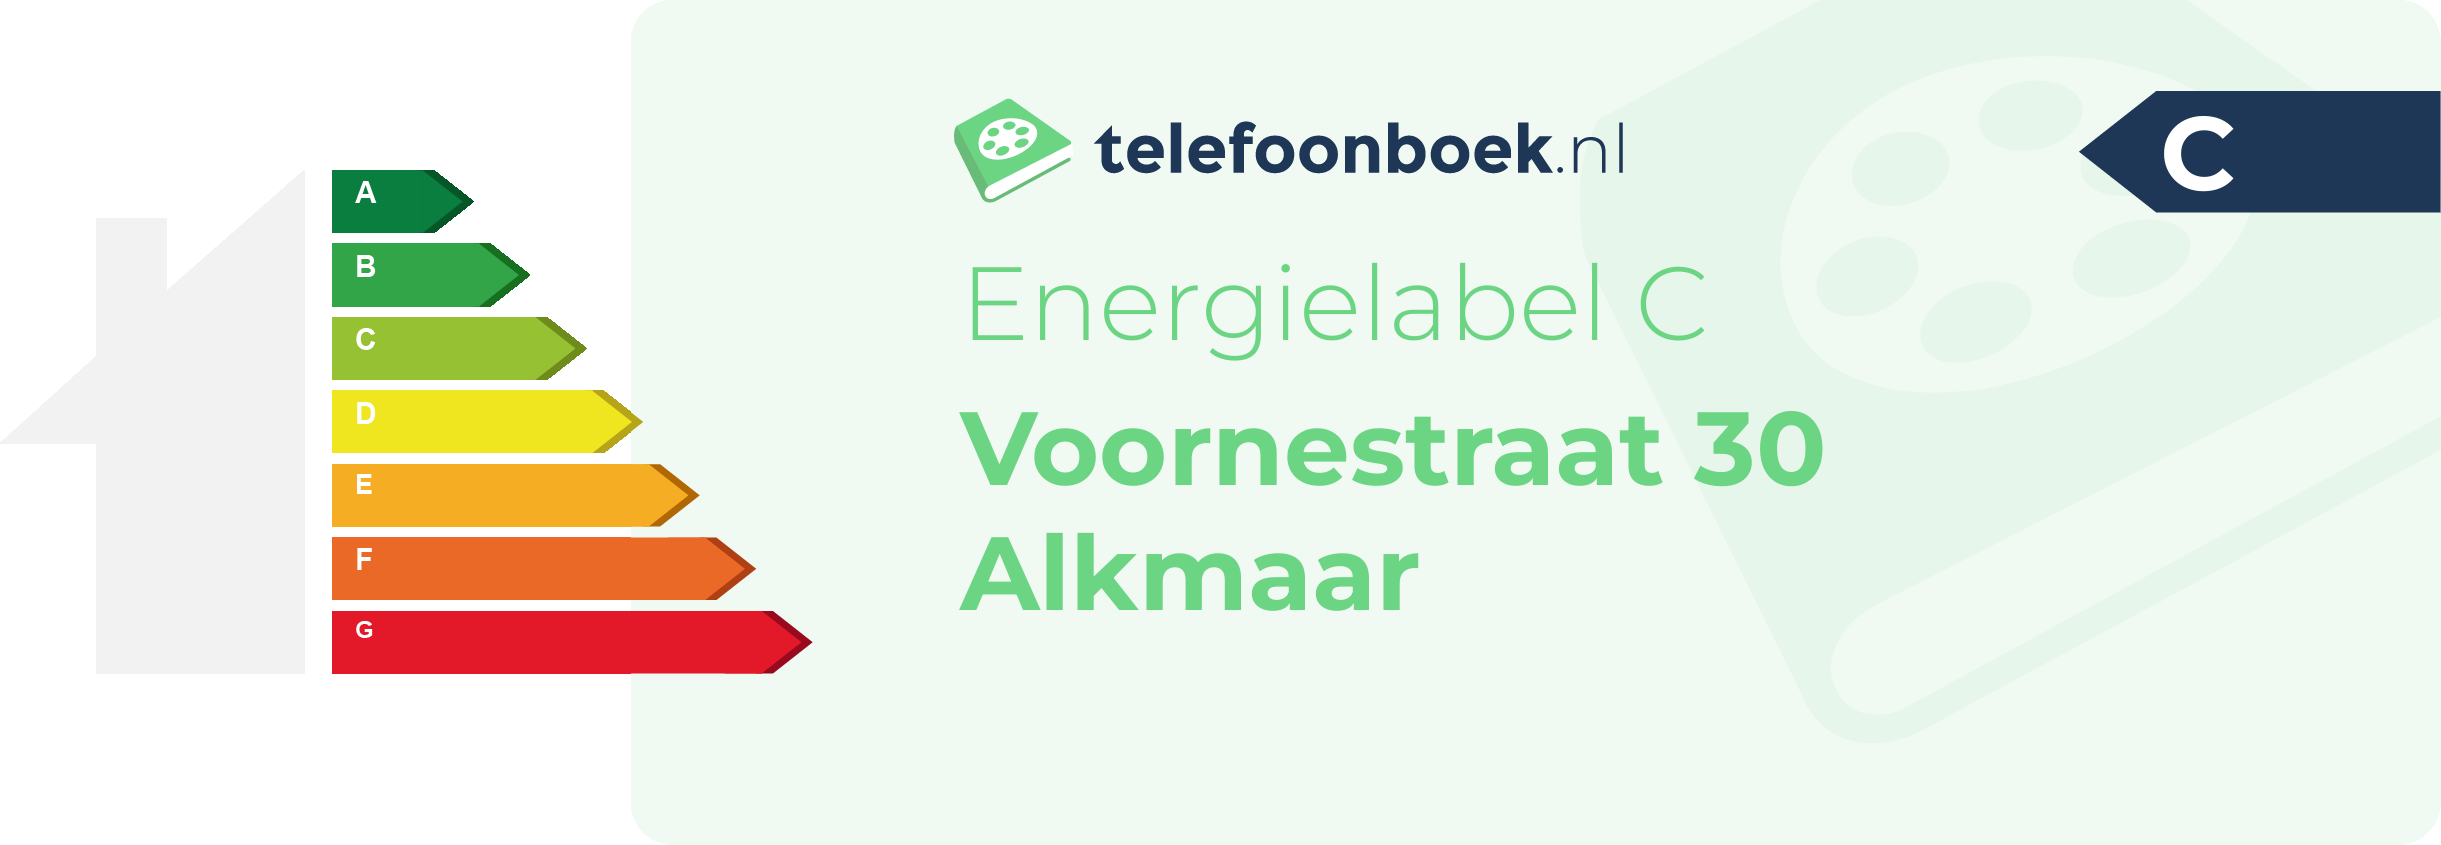 Energielabel Voornestraat 30 Alkmaar